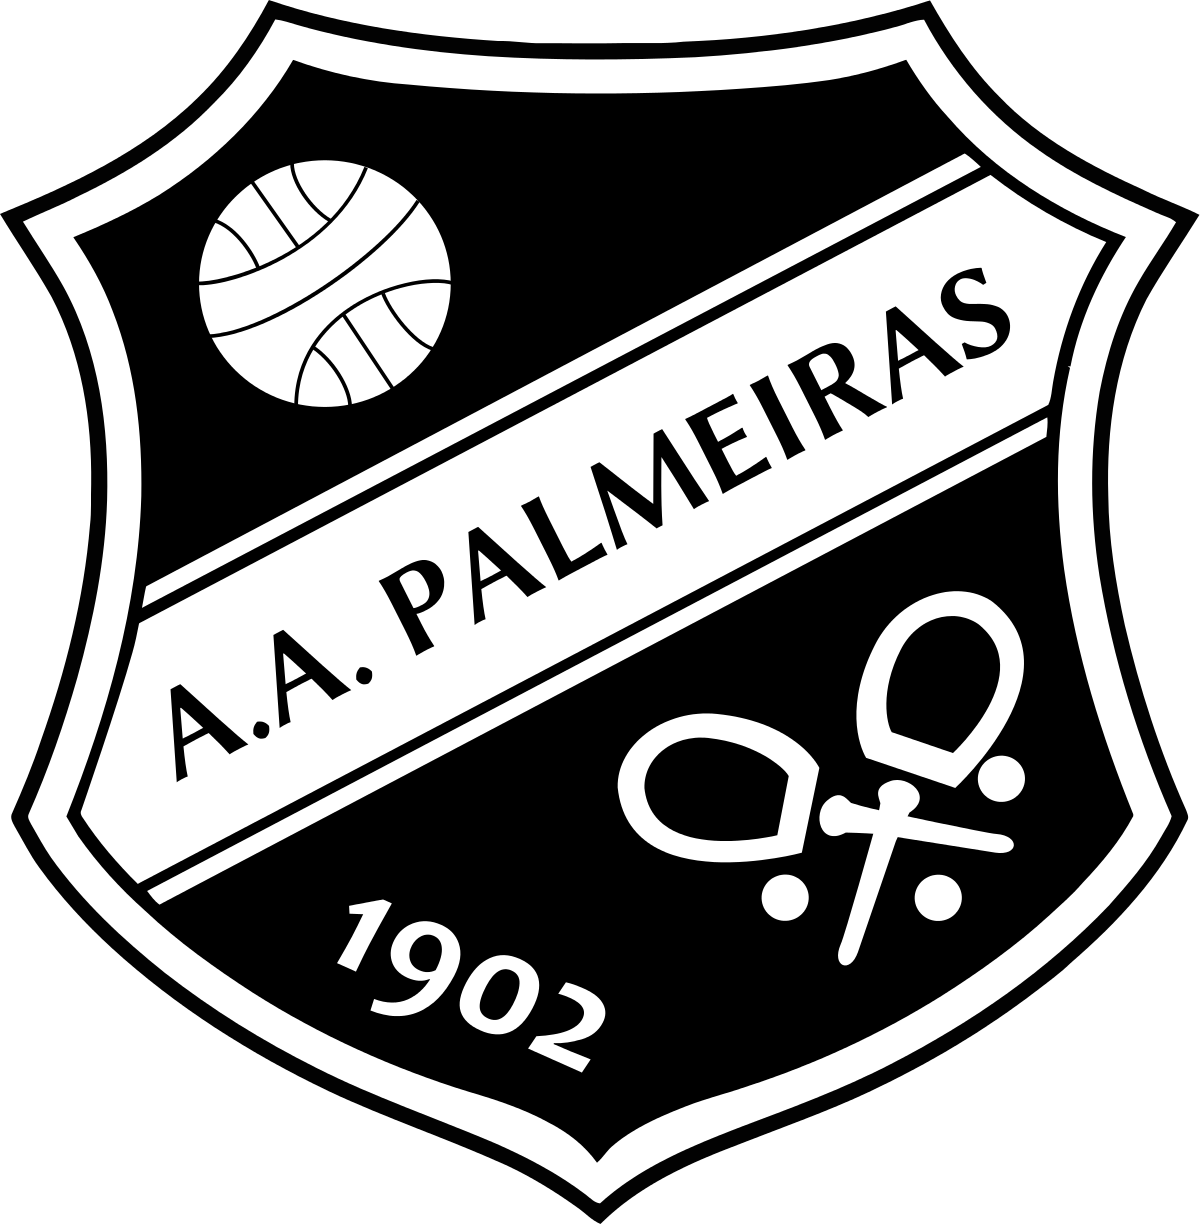 File:Palmeiras-Santos-Campeonato-Paulista-2022.png - Wikimedia Commons